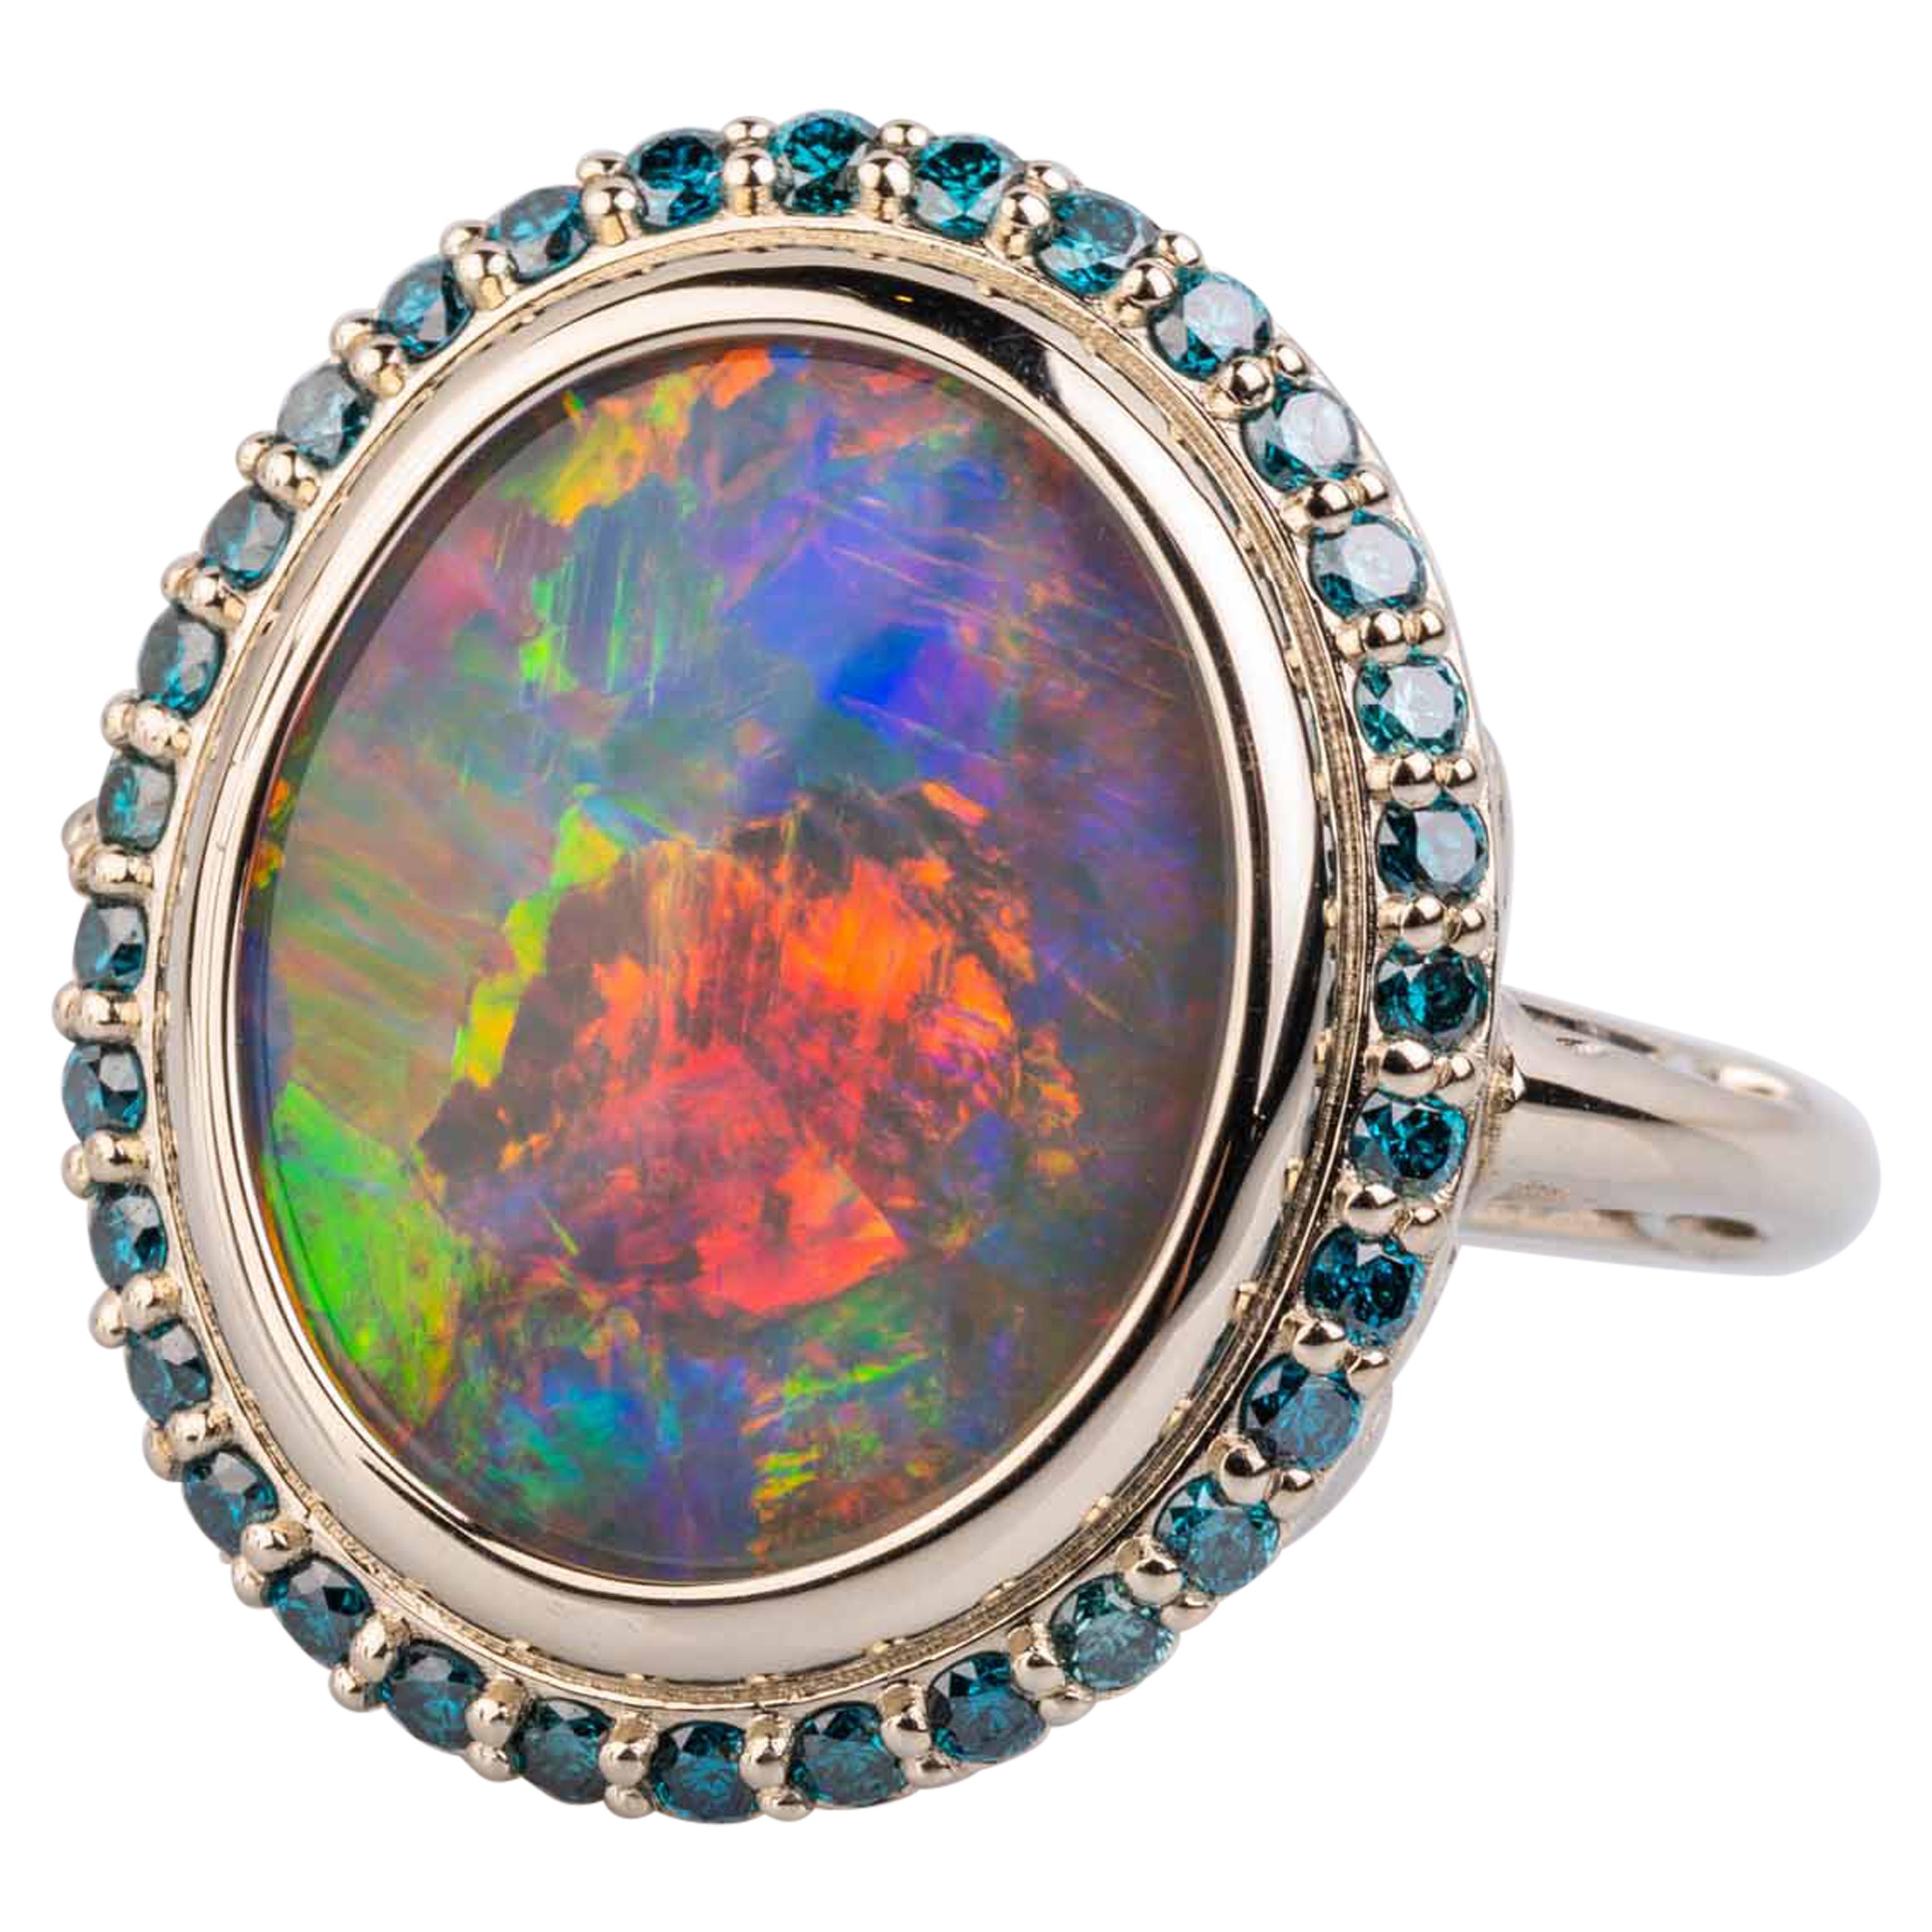 18 Karat White Gold Black Opal Ring with Teal Blue Diamond Halo